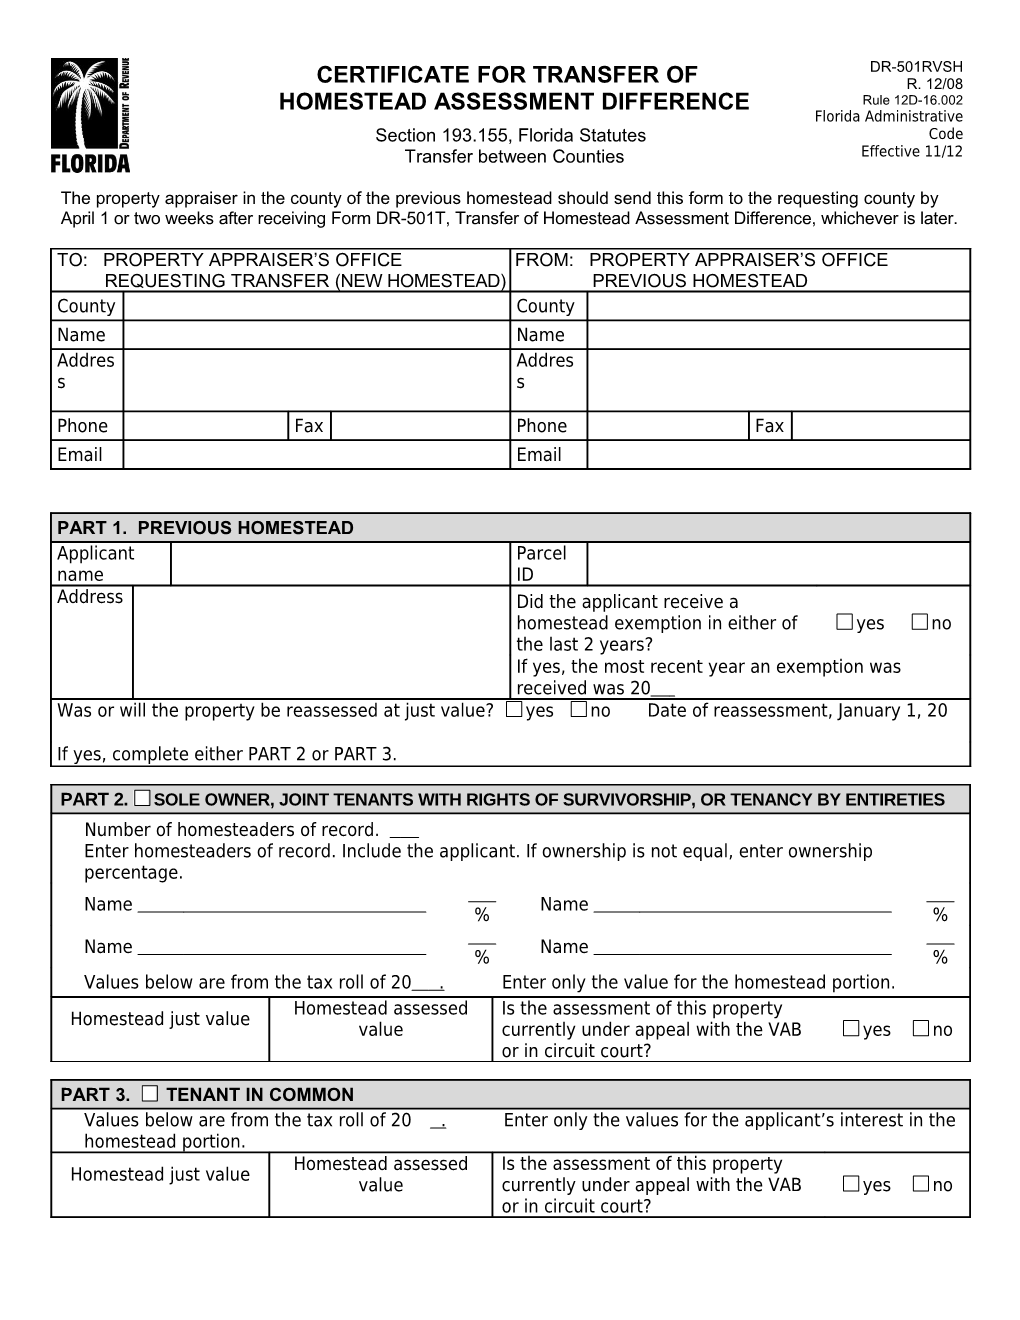 Certificate for Transfer of Homestead Assessment Diference